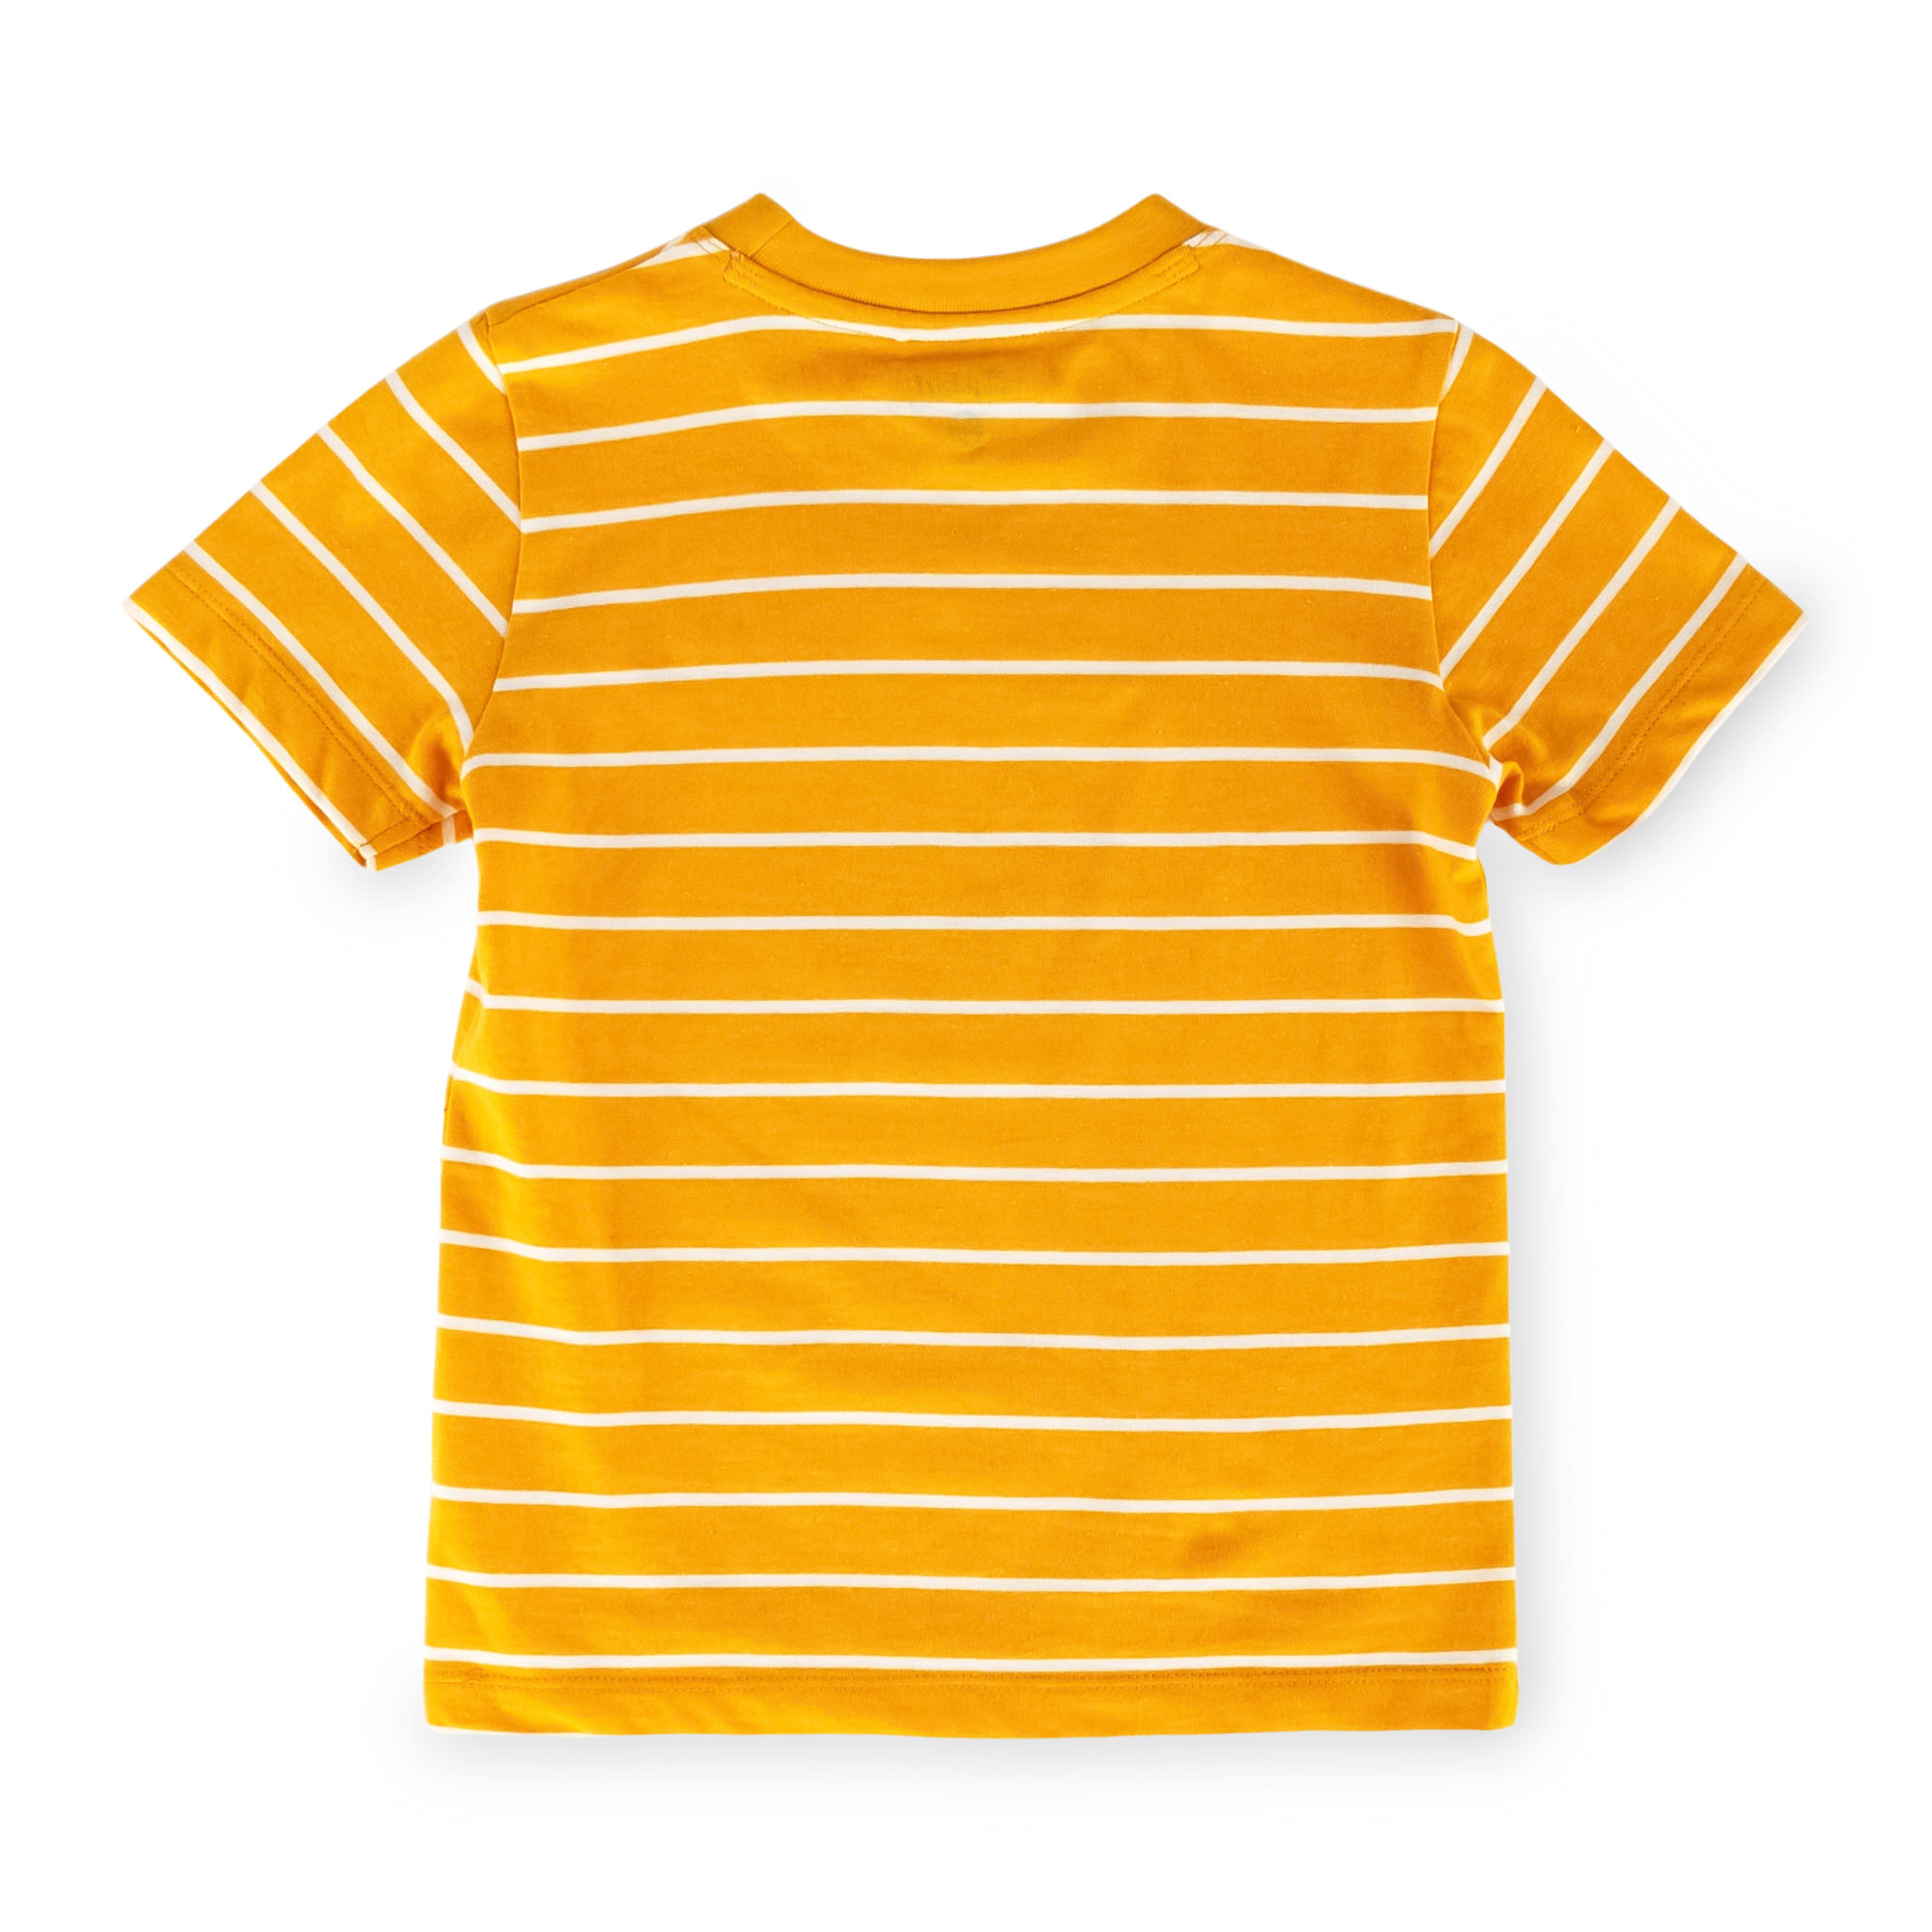 Children's shorty pyjamas sleepy sleuth, yellow/grey